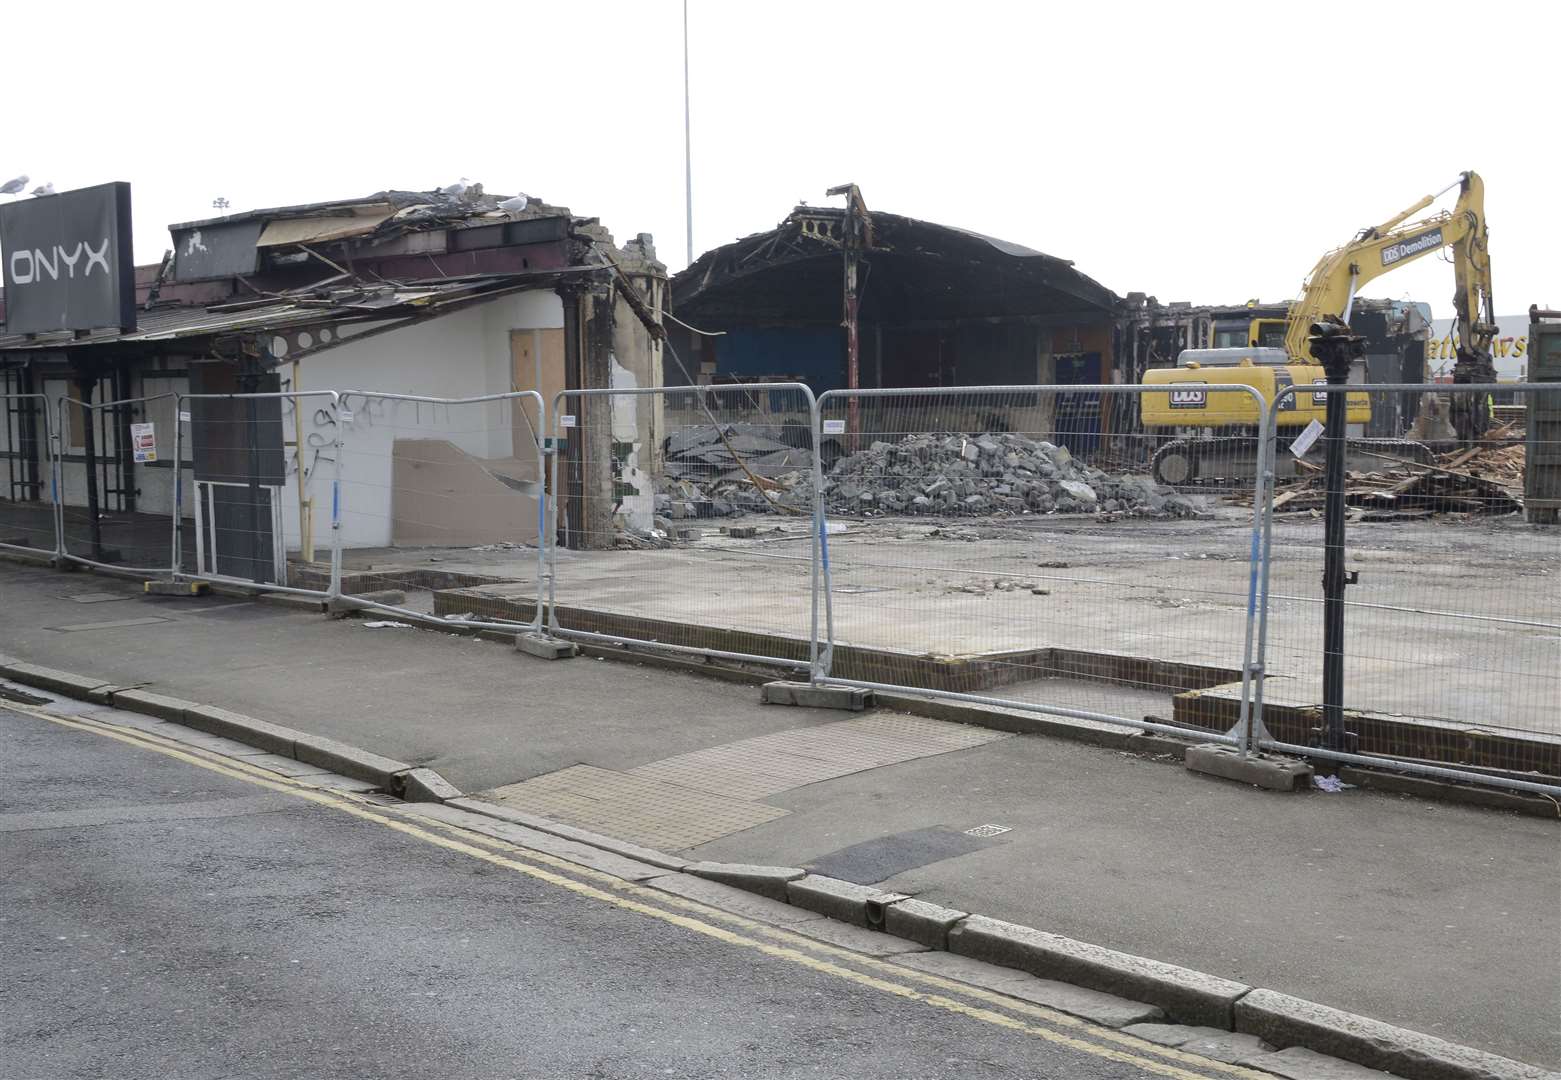 The demolition of Onyx nightclub on Folkestone seafront